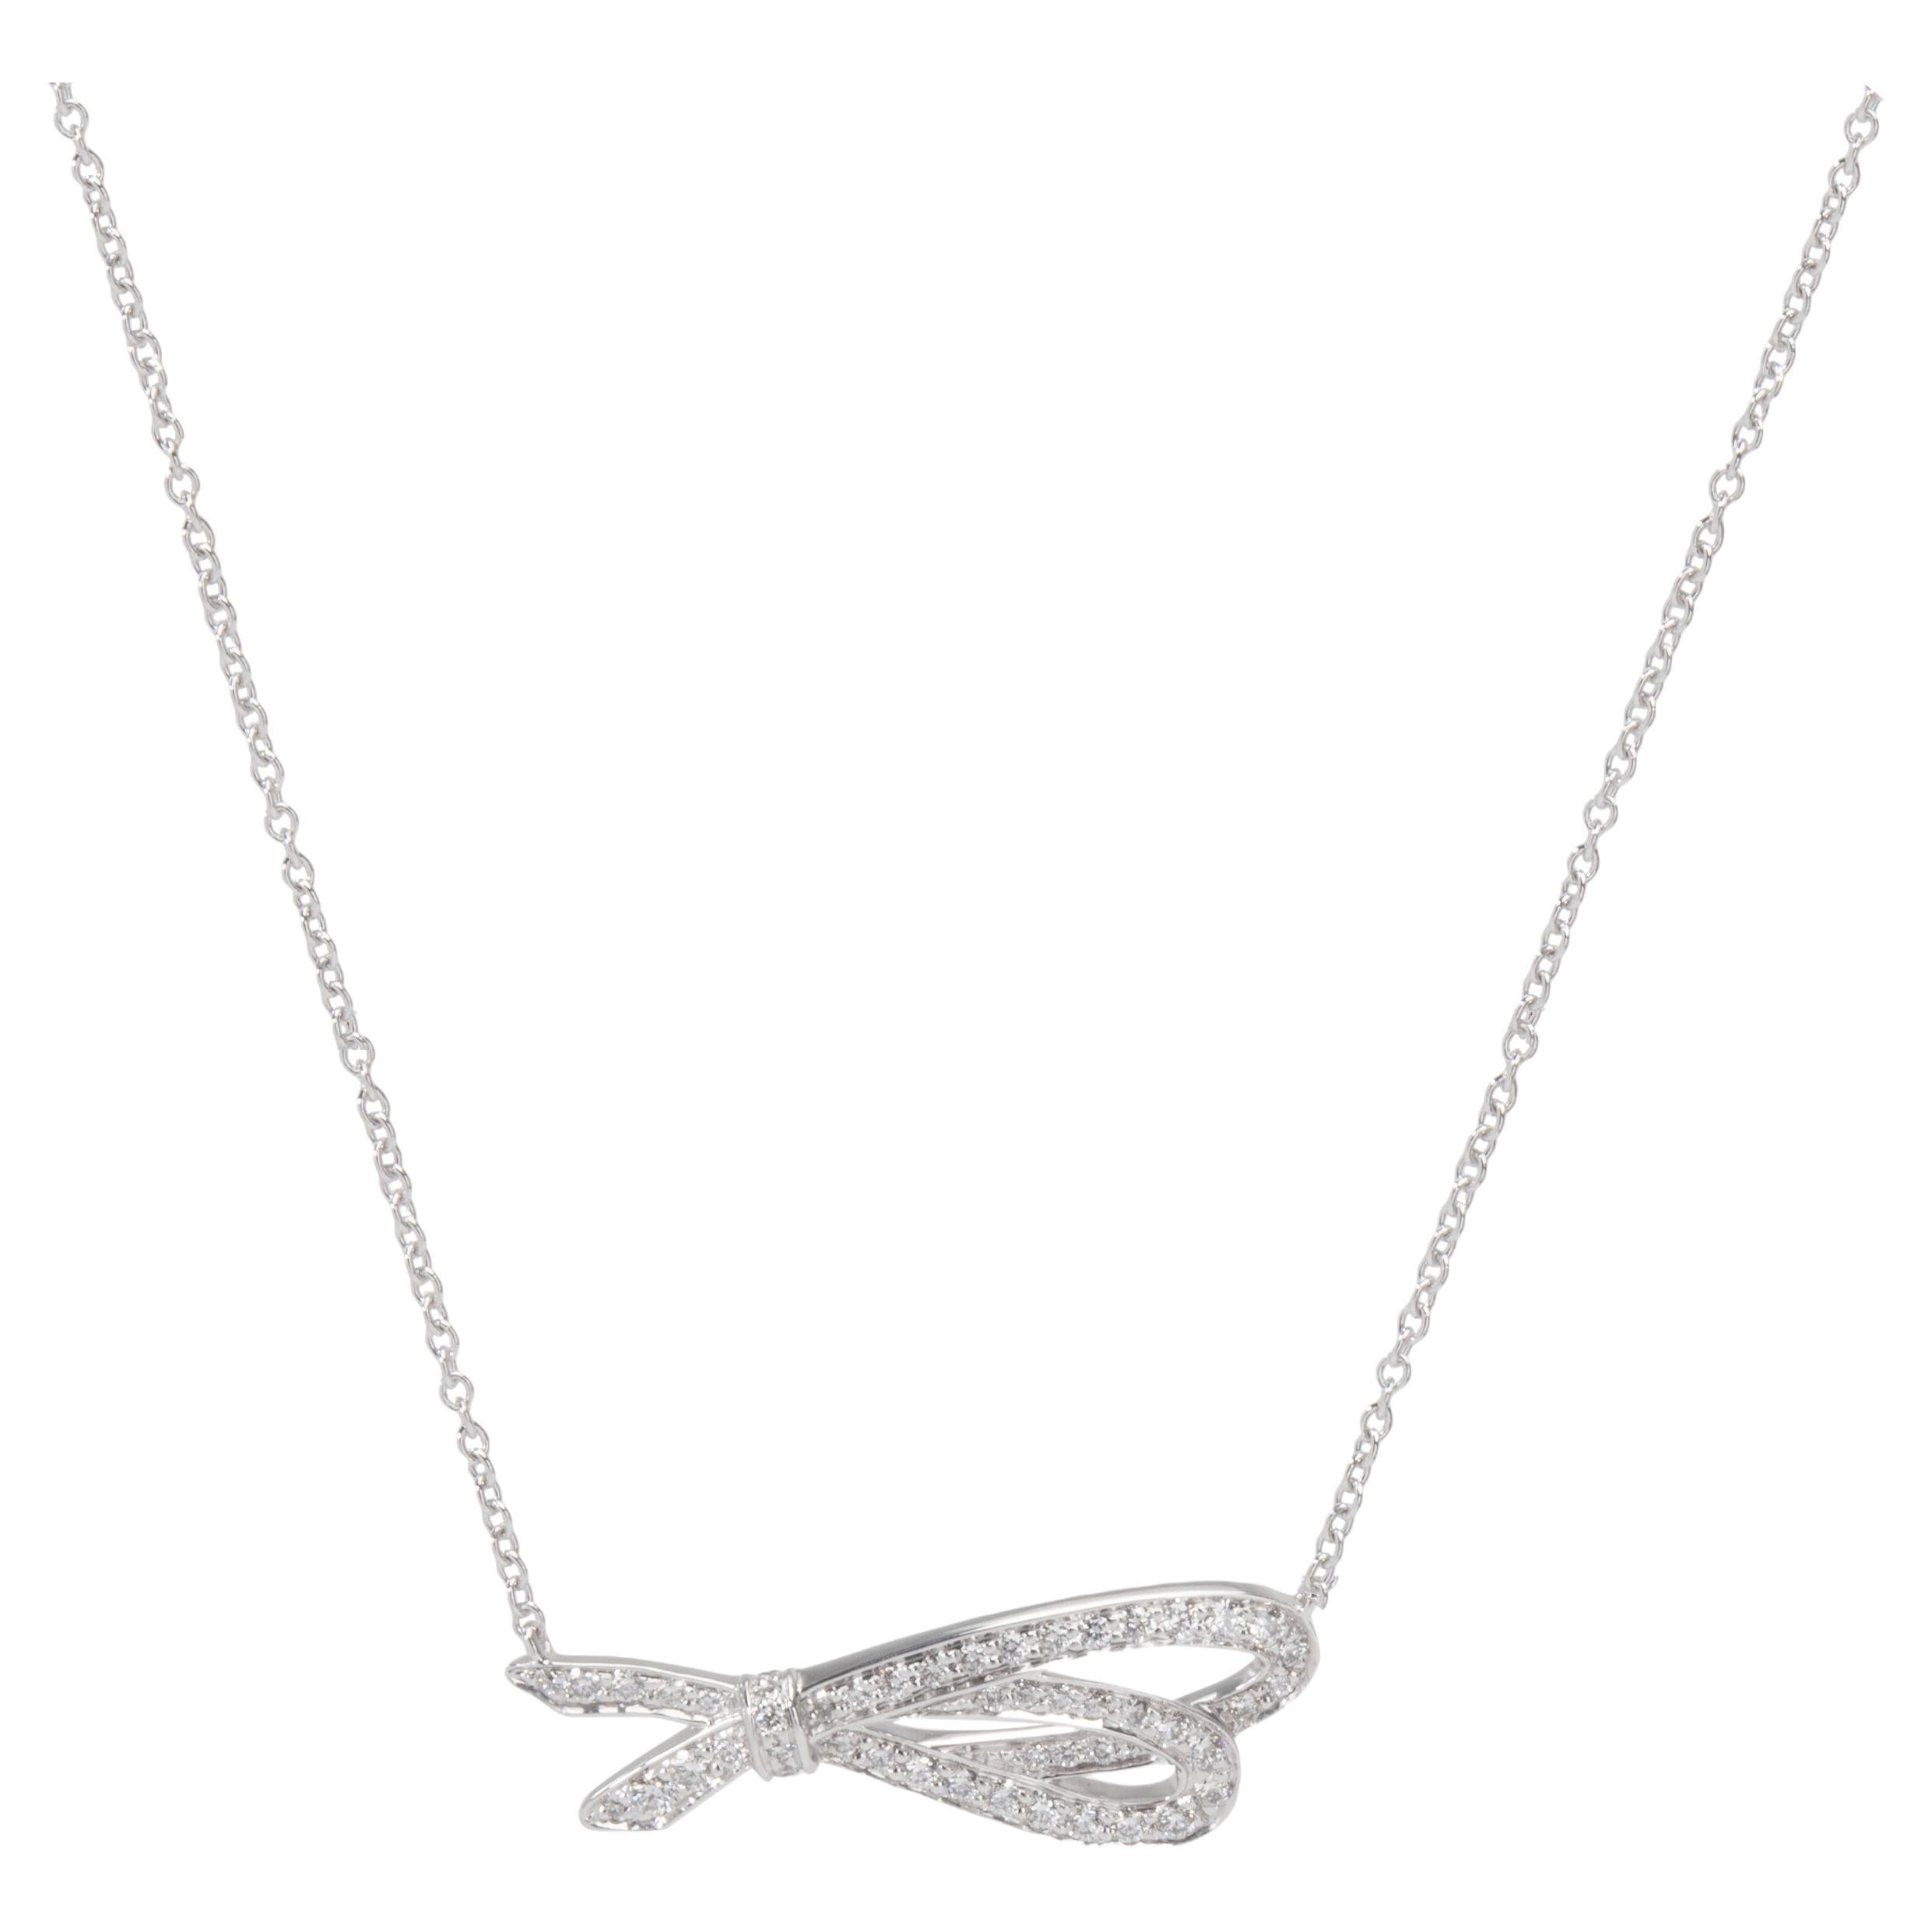 Tiffany & Co. Diamond Bow Pendant in 18k White Gold 0.37 Ctw